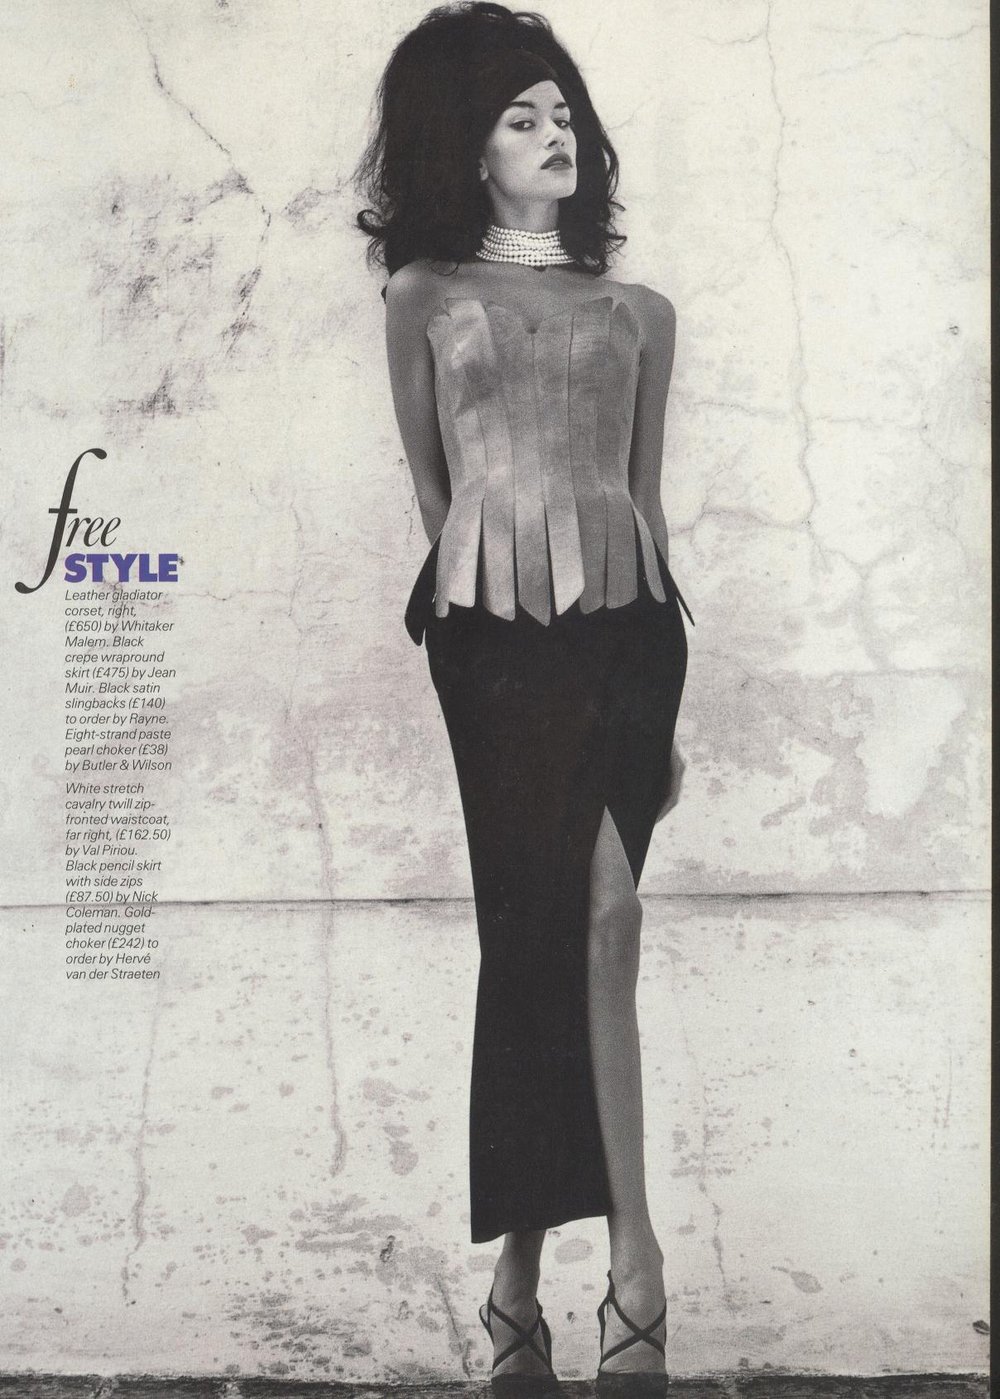 whitaker-malem-fashion-formed-leather-slatted-bustier-elle-magazine.jpg